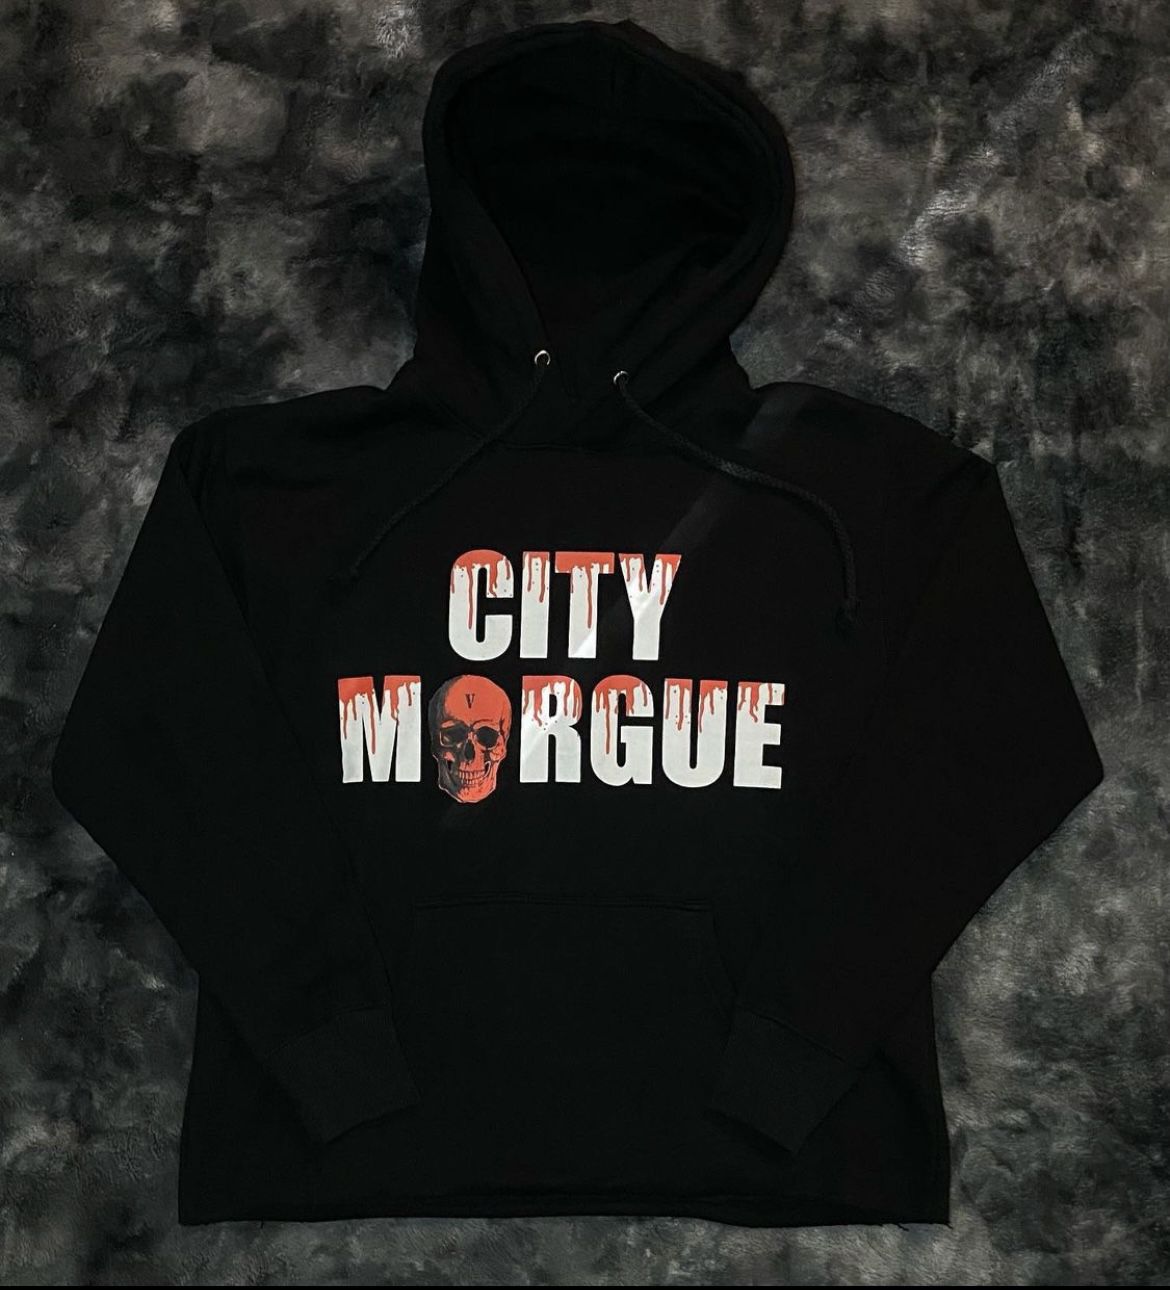 Vlone X City Morgue Hoodies